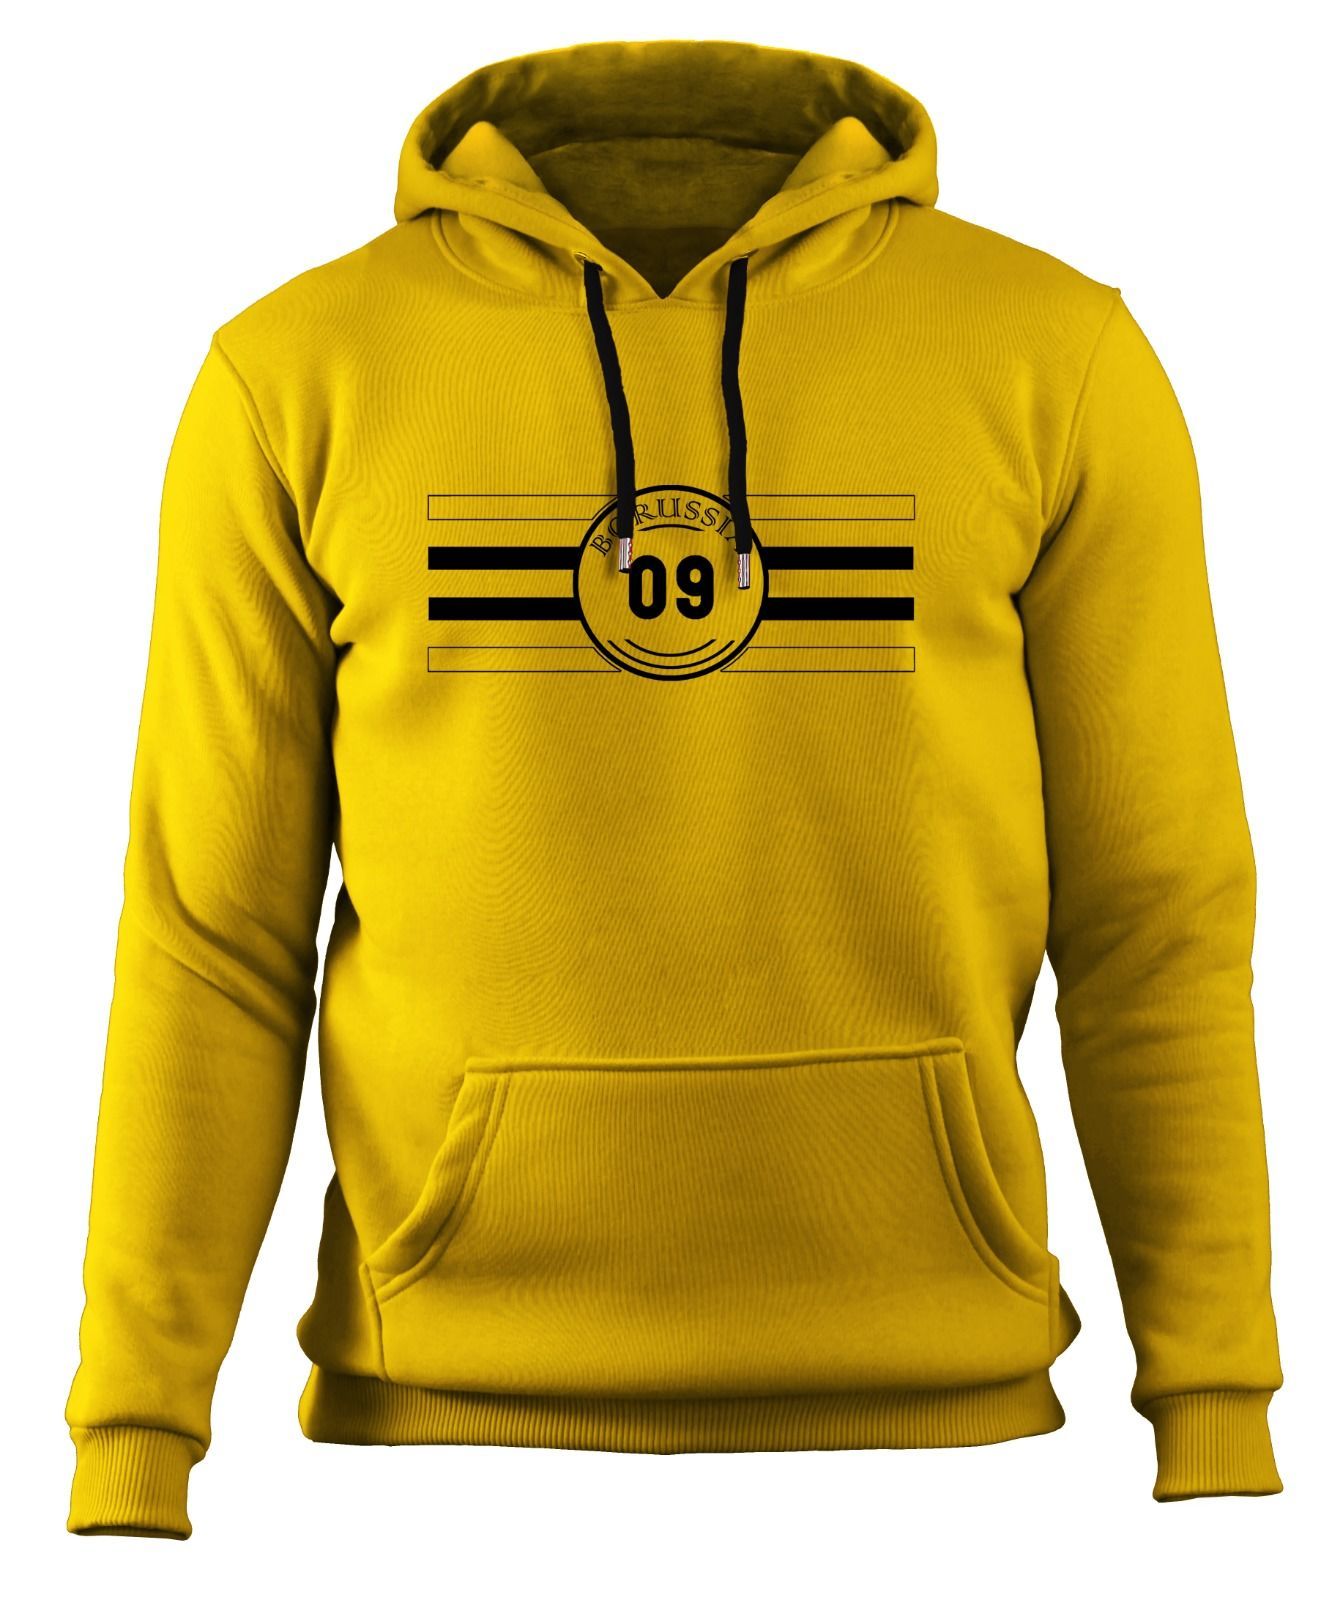 Dortmund - Borussia 09 - Sweatshirt